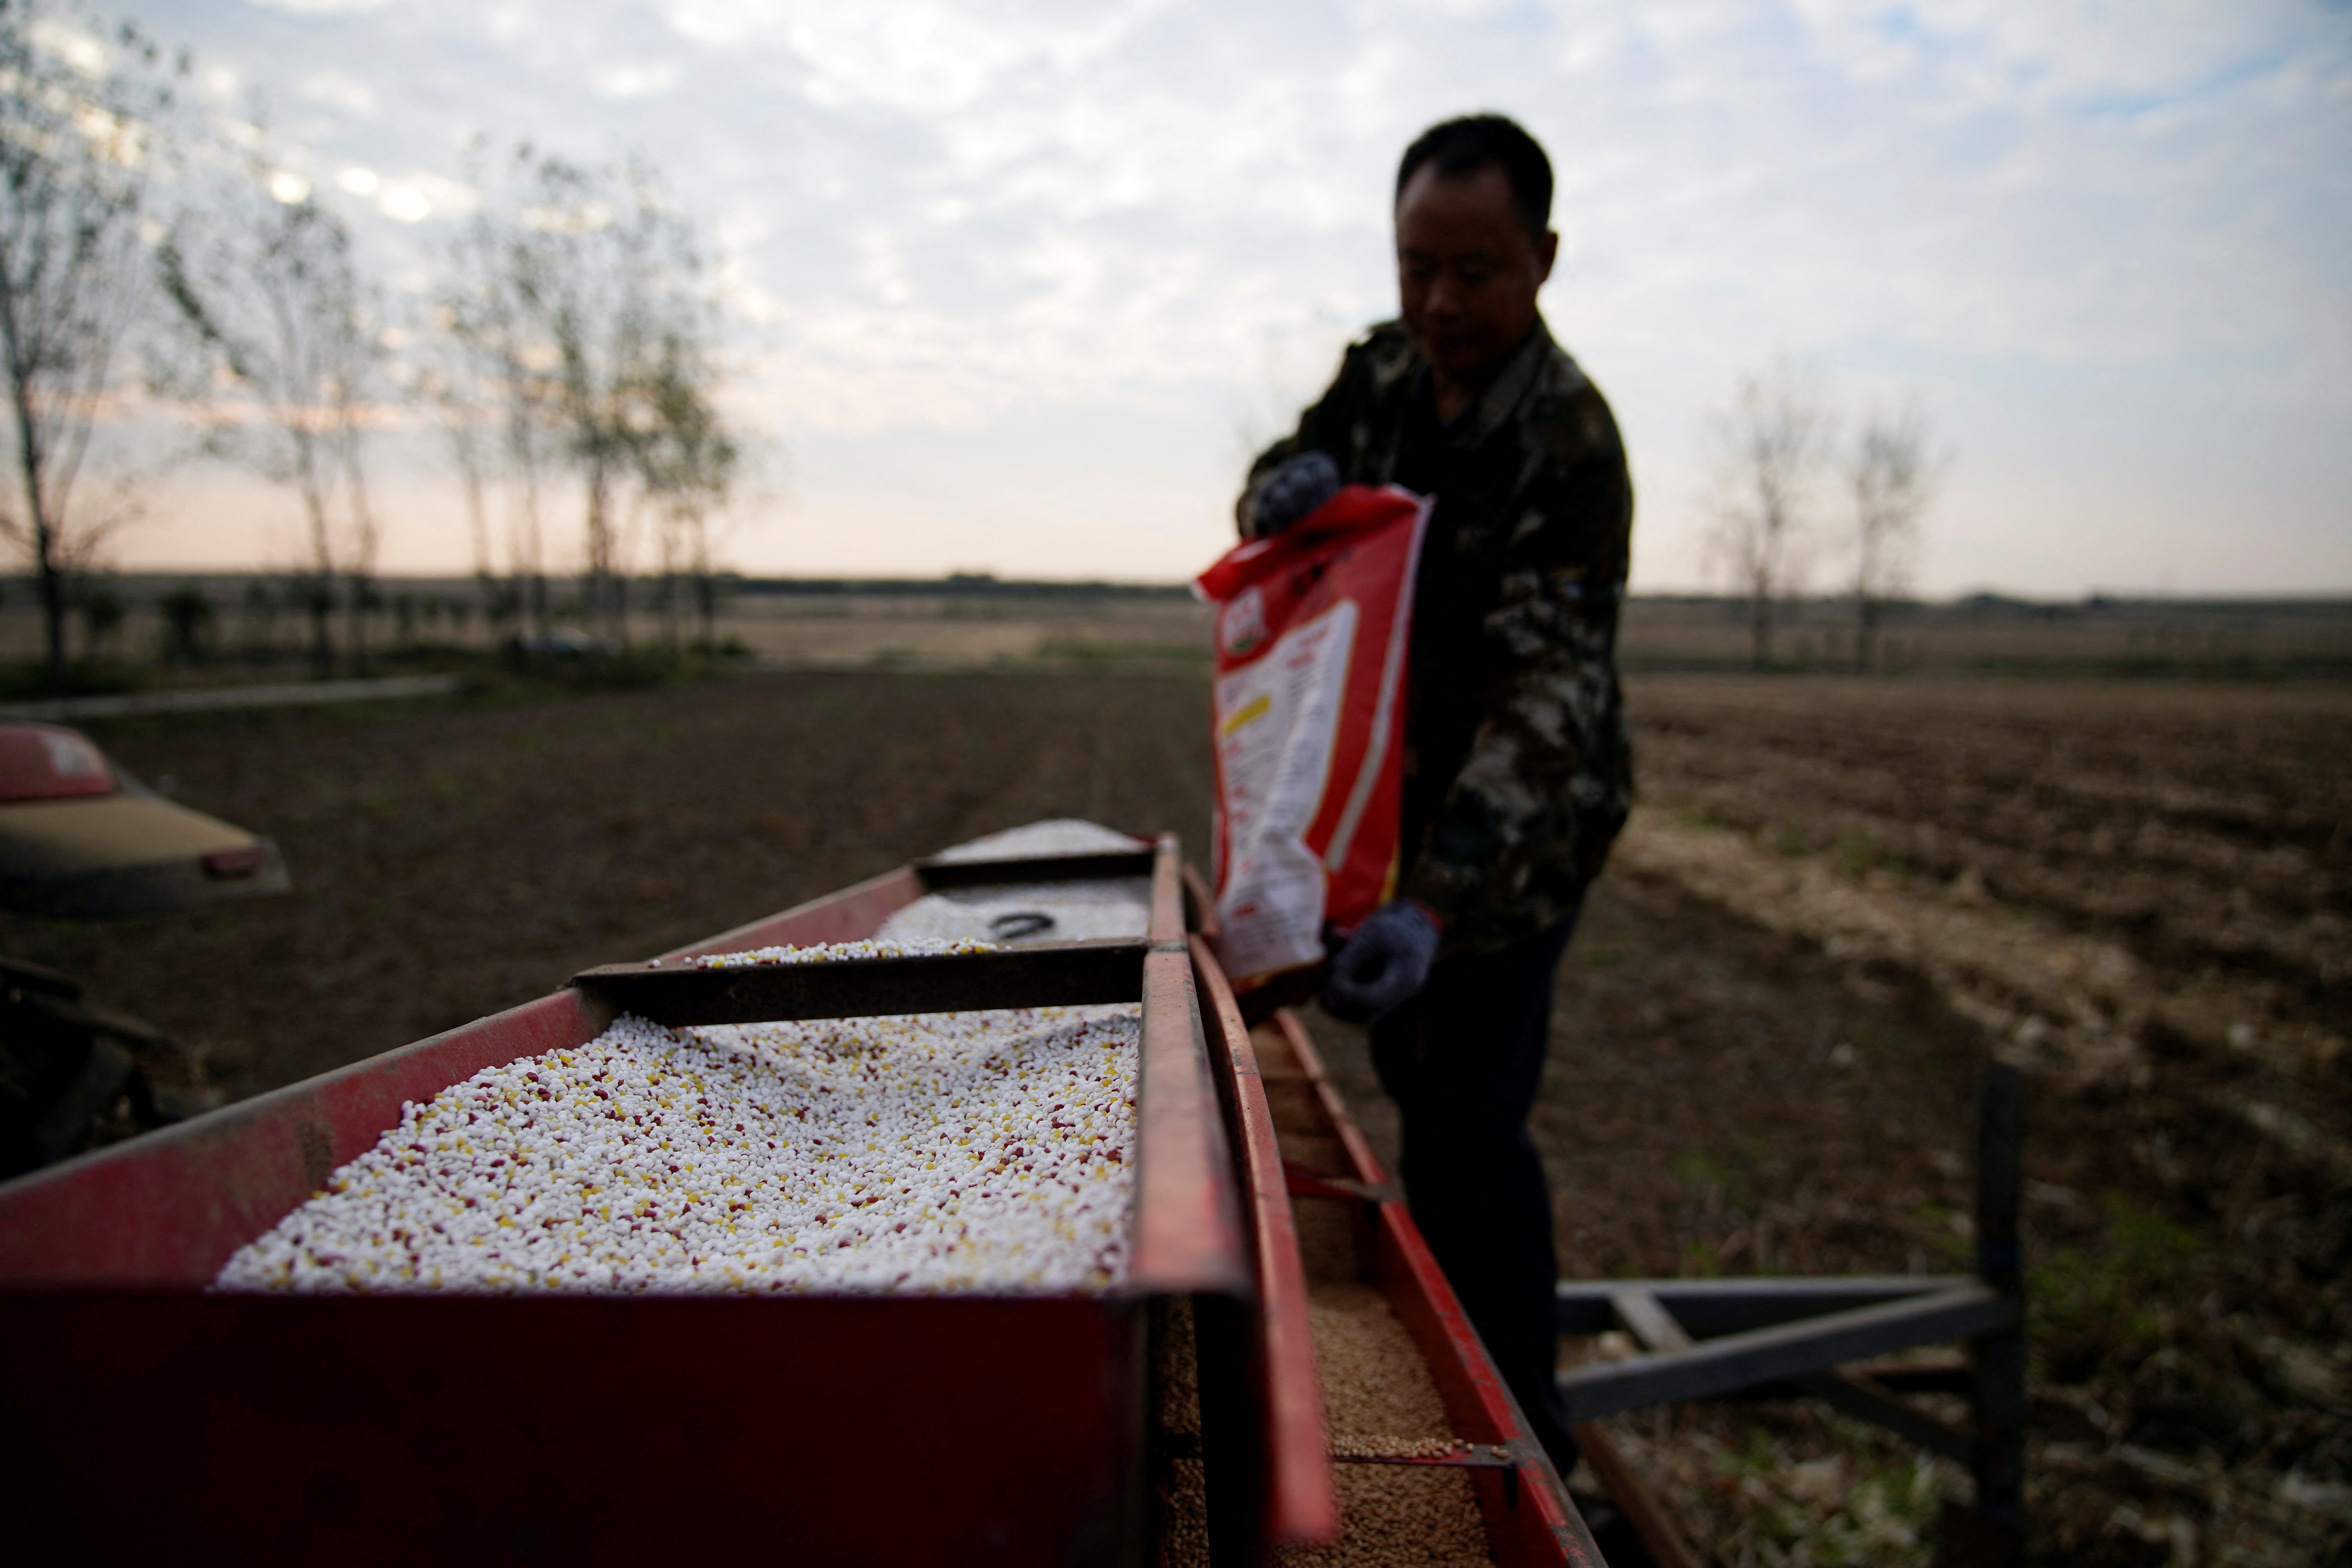 Farmer loads seeds into a seeder with fertiliser on a wheat field, in Nanyang